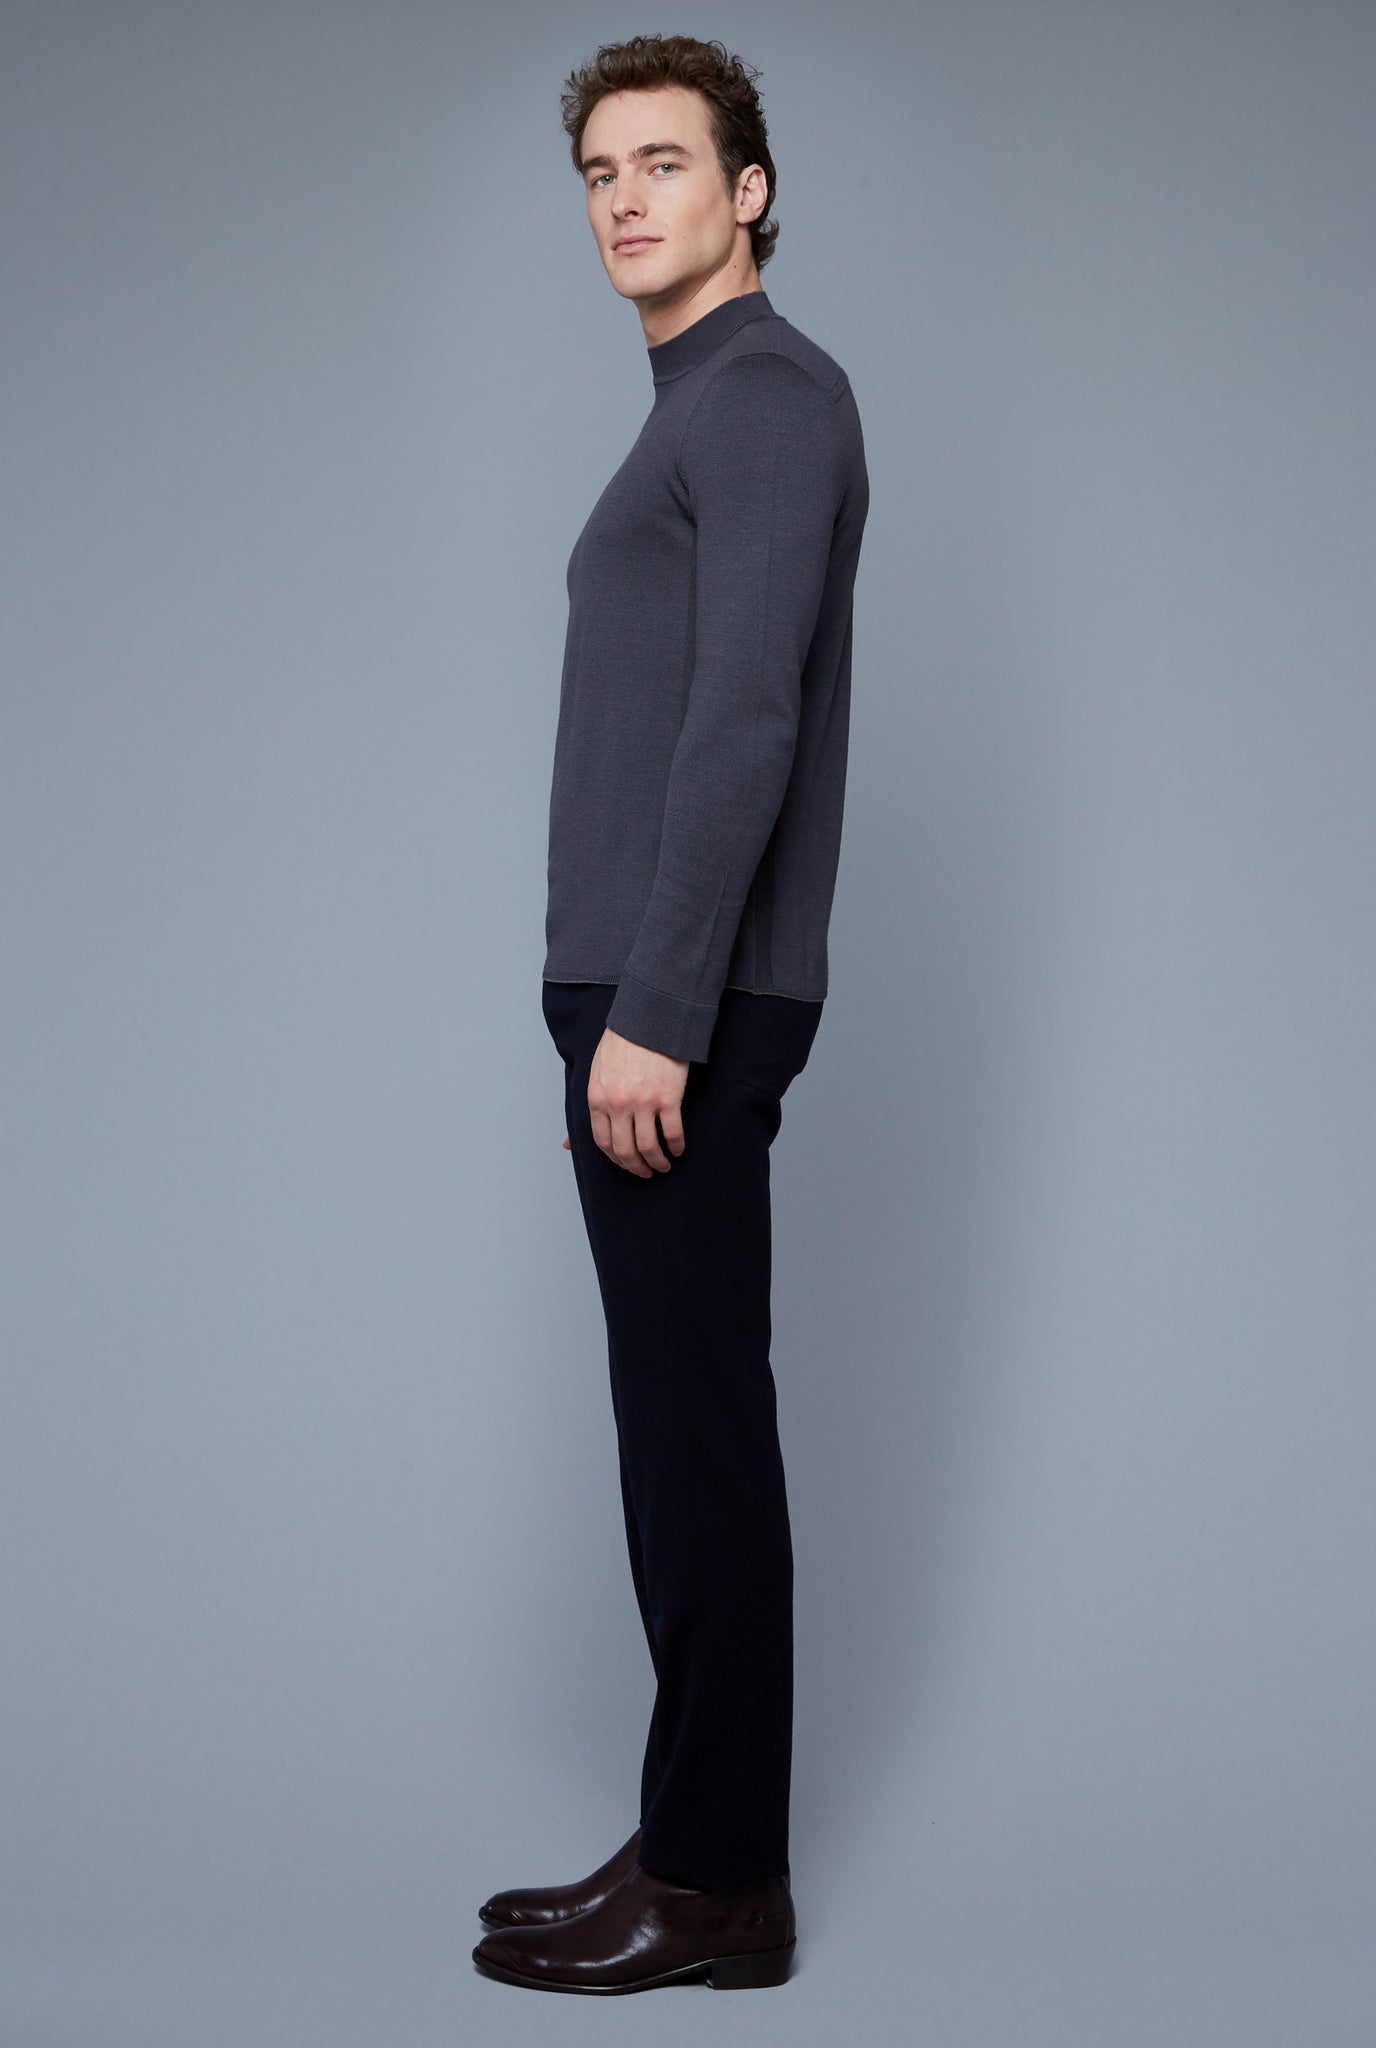 Side View: Model Hans Weiner wearing Royal Neck Sweater Tee